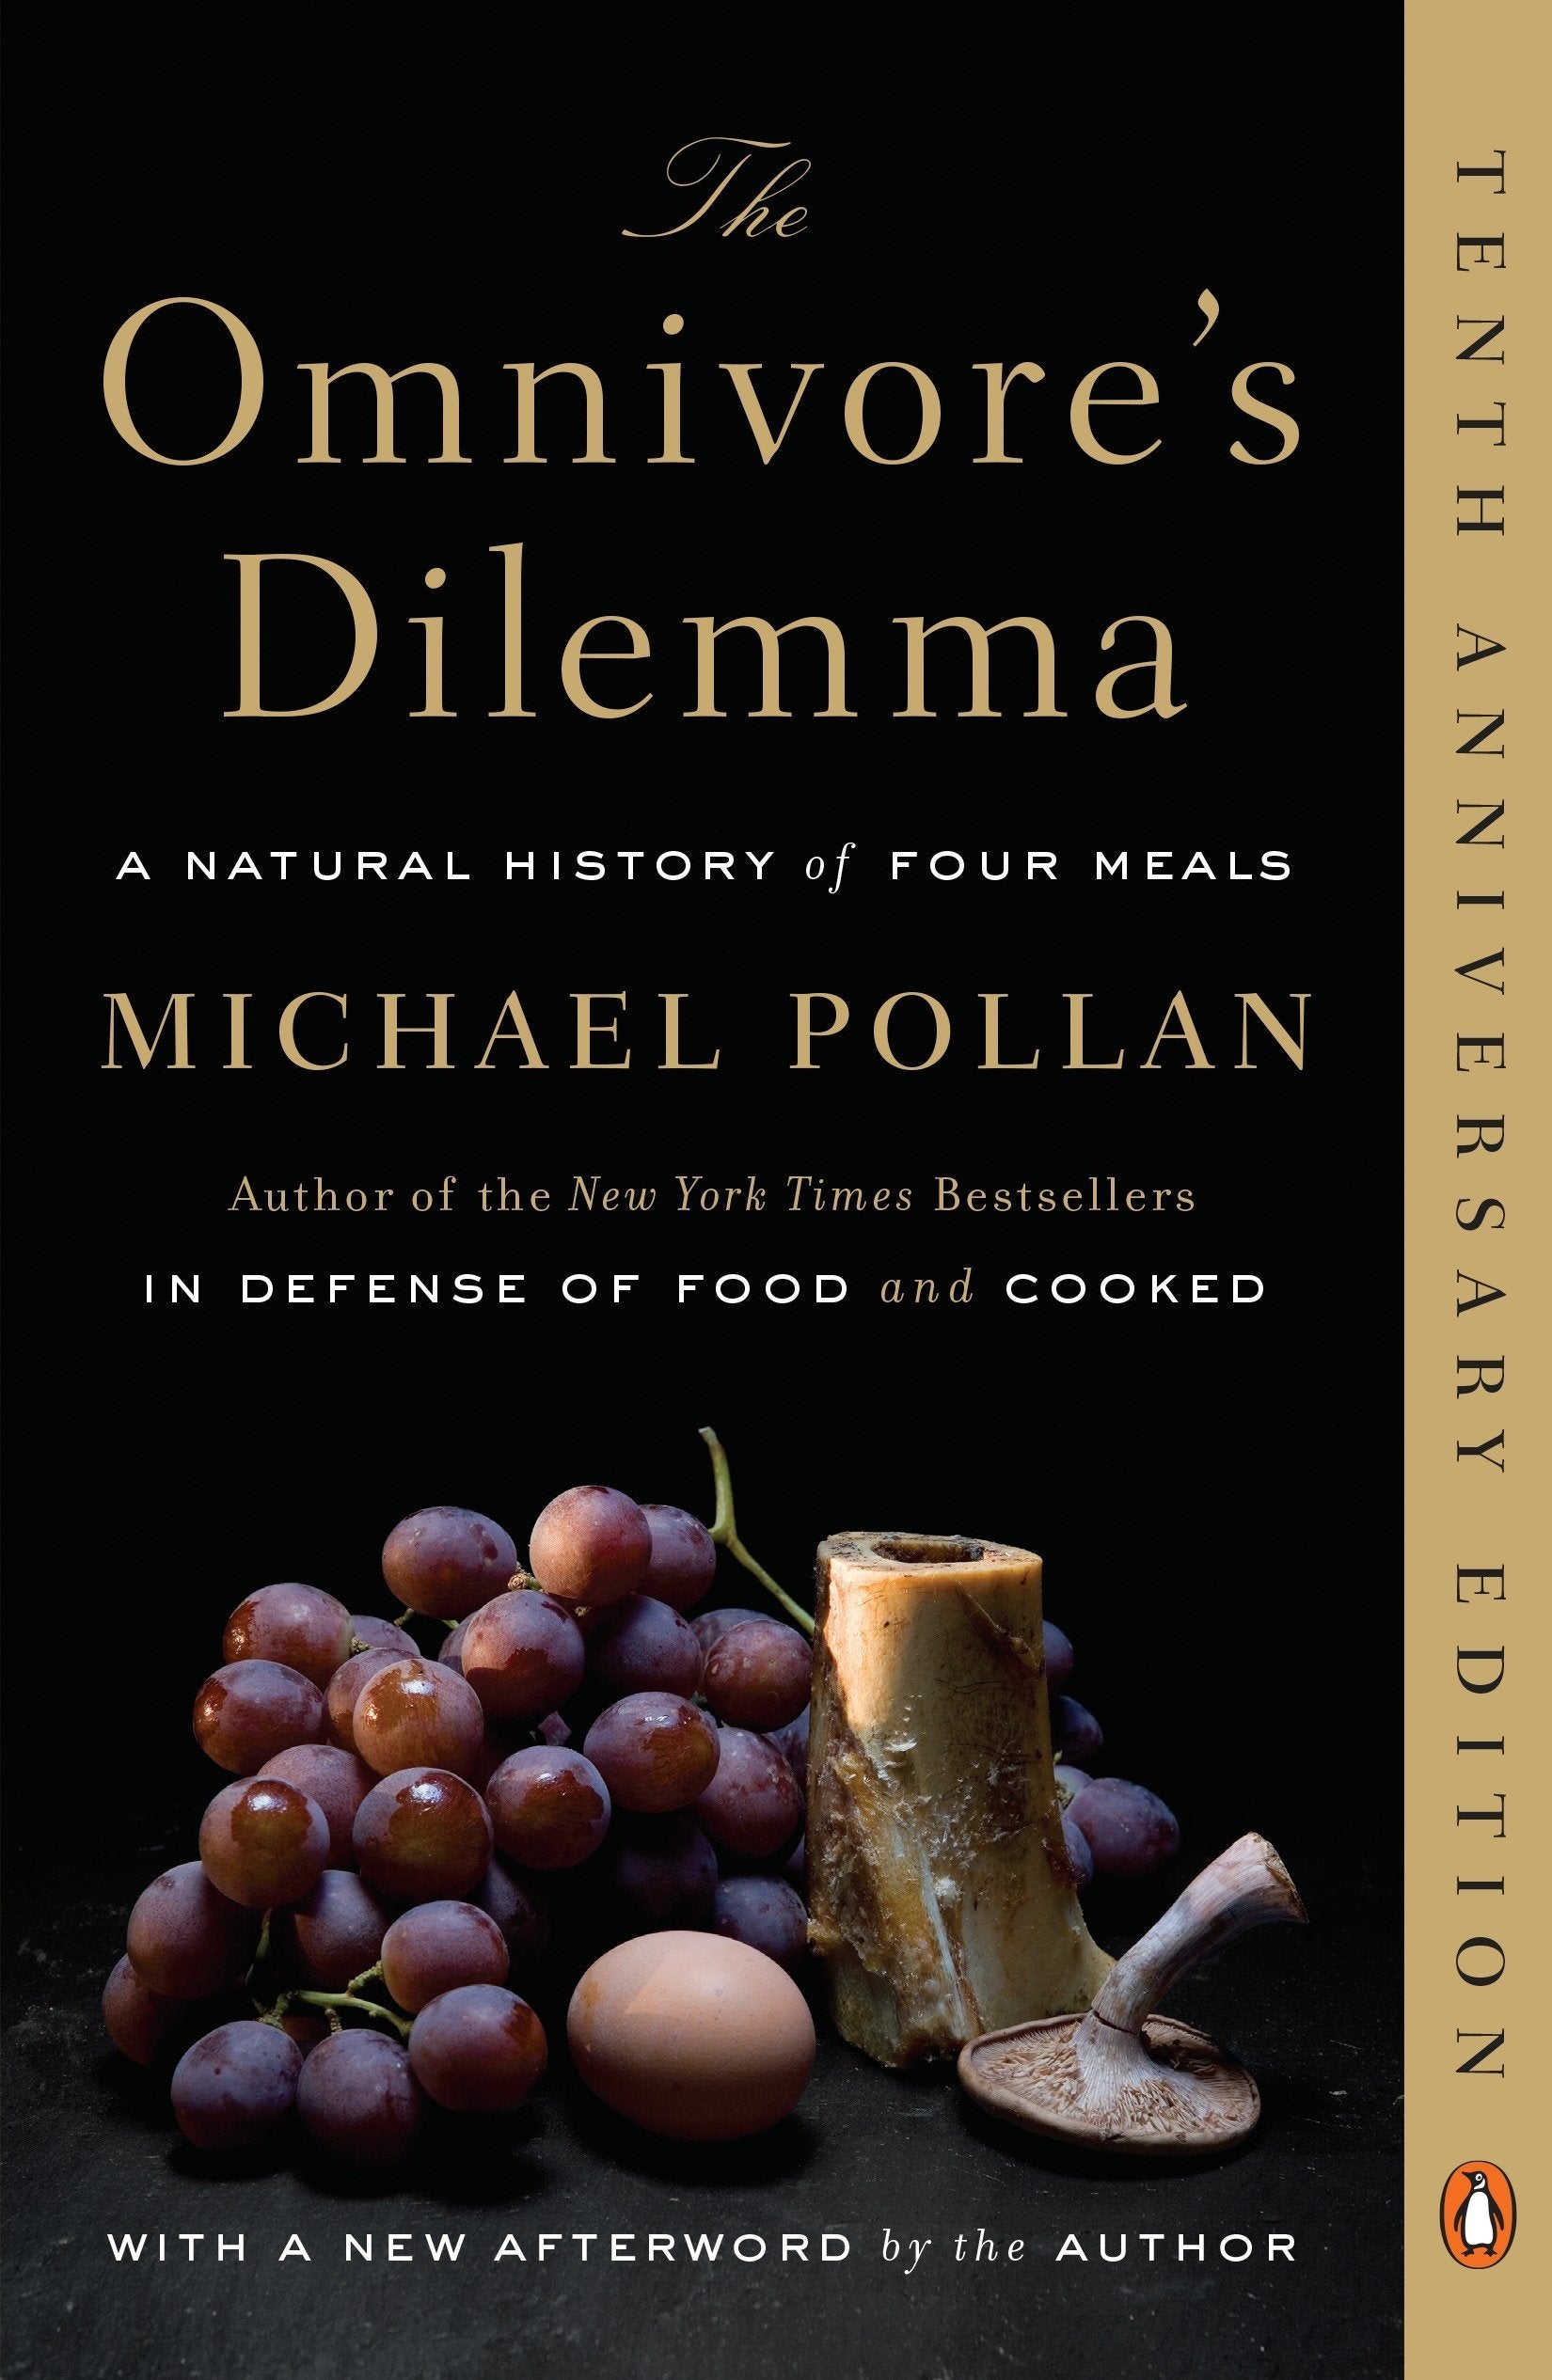 The Omnivore's Dilemma (Michael Pollan)